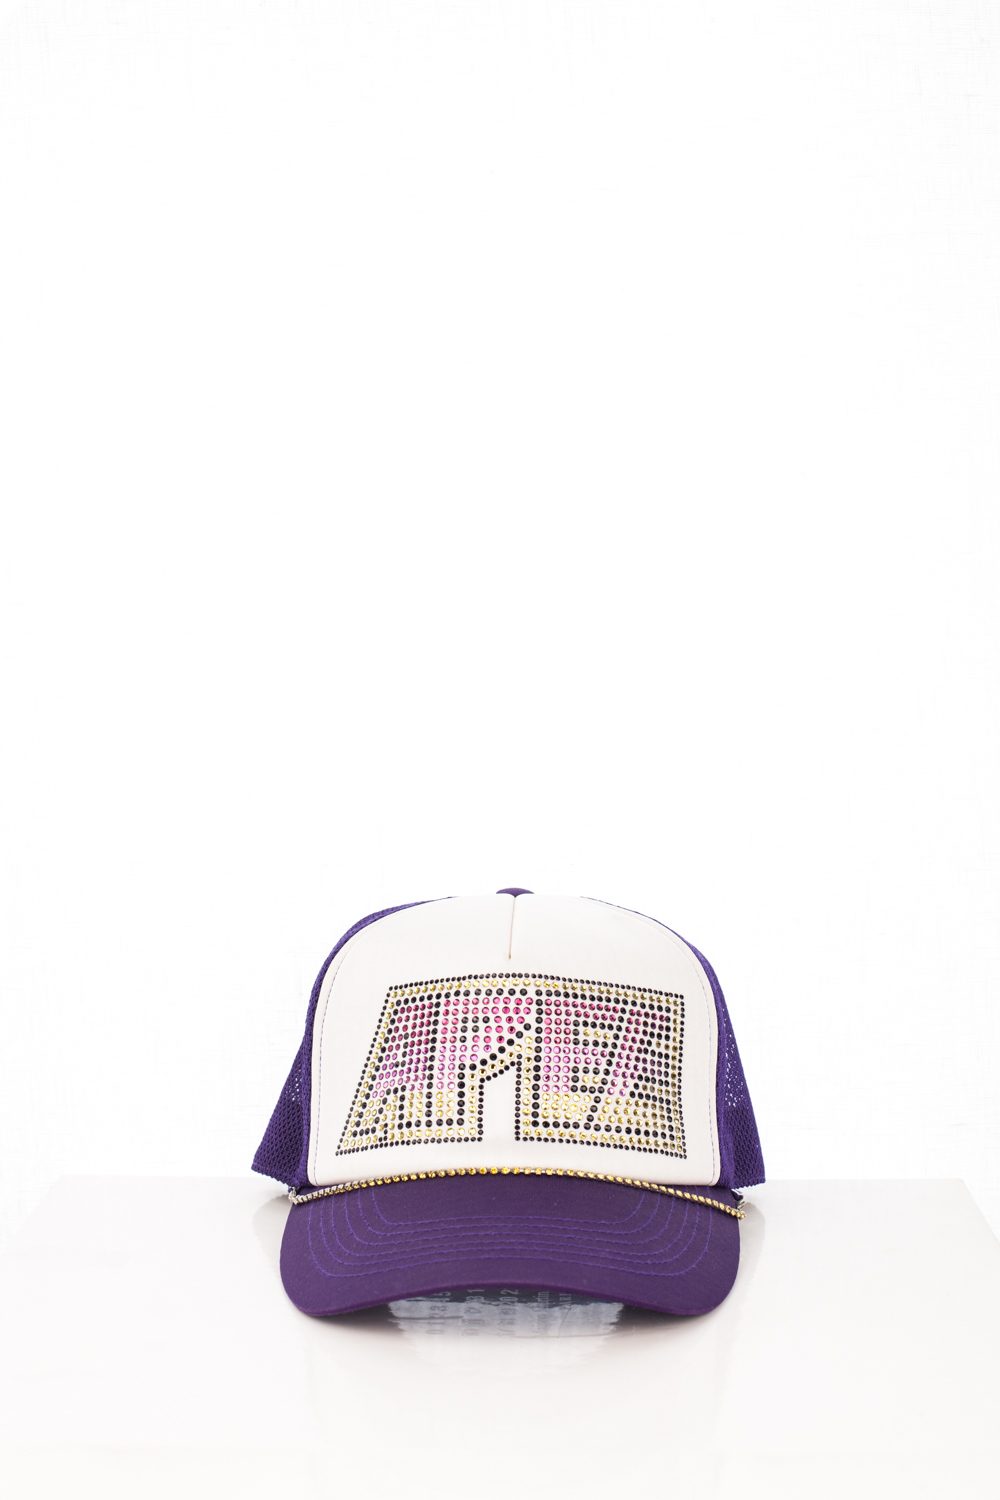 06 Purple “APEE” Swarovski Trucker Hat